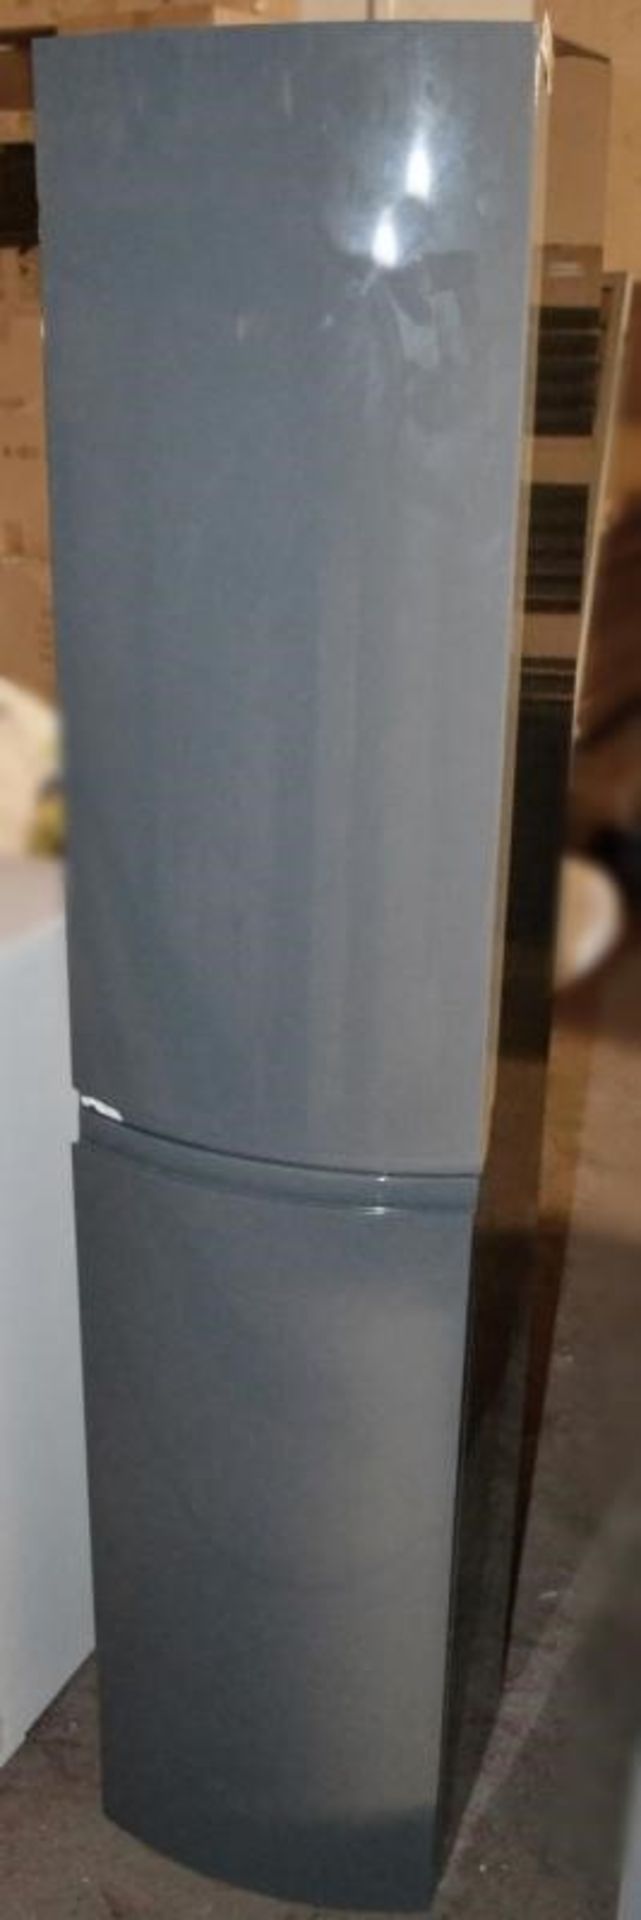 1 x Curved Tallboy Unit In A Dark Grey Lacquer - Dimensions: D28 x 30 x 140cm - Ex-Display Unit, Req